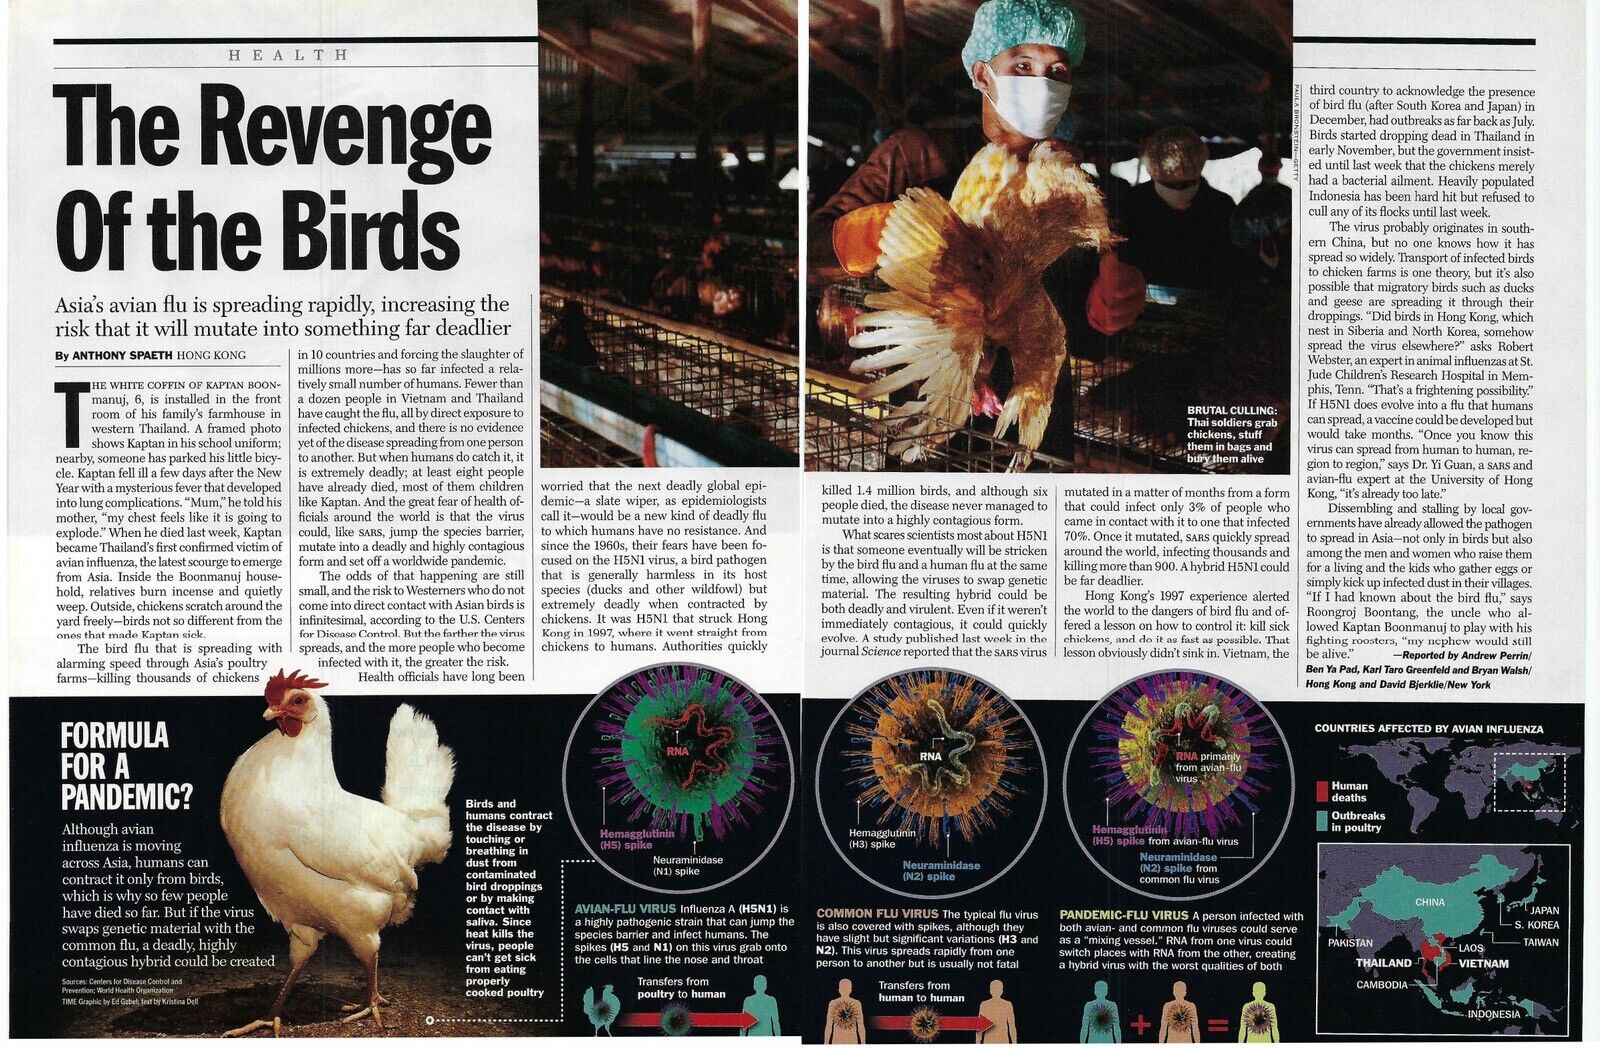 2004 Time The Revenge of the Birds Avian Flu Magazine Print Ad/Poster/Article